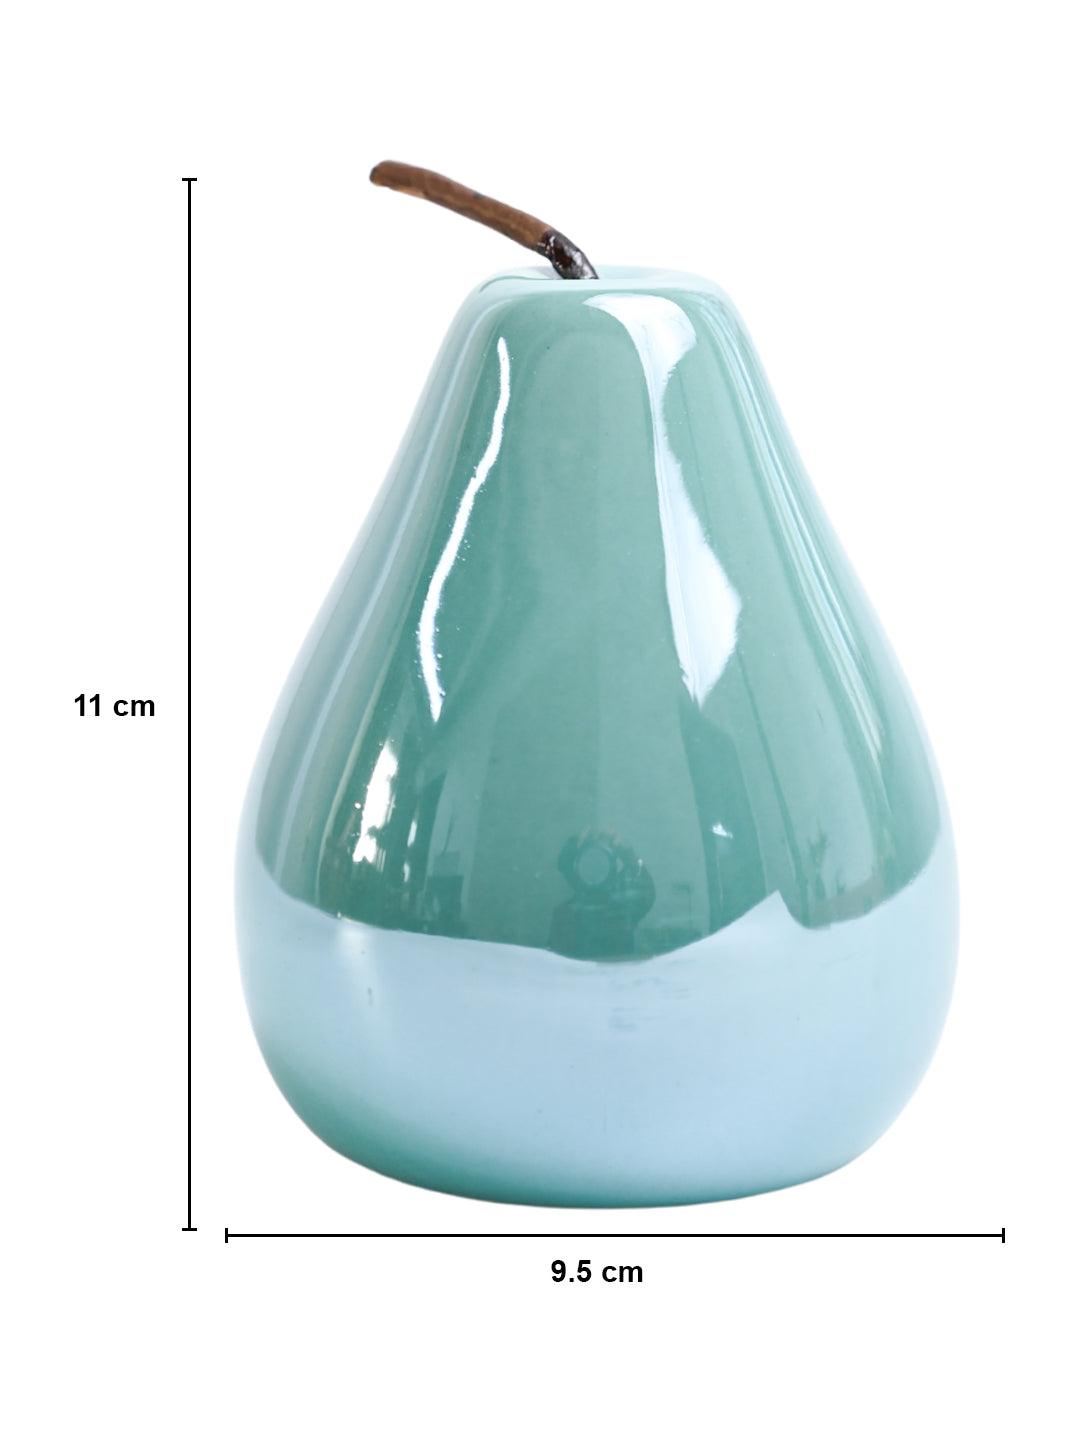 VON CASA Decorative Pear - Ceramic, Sky Blue - MARKET99